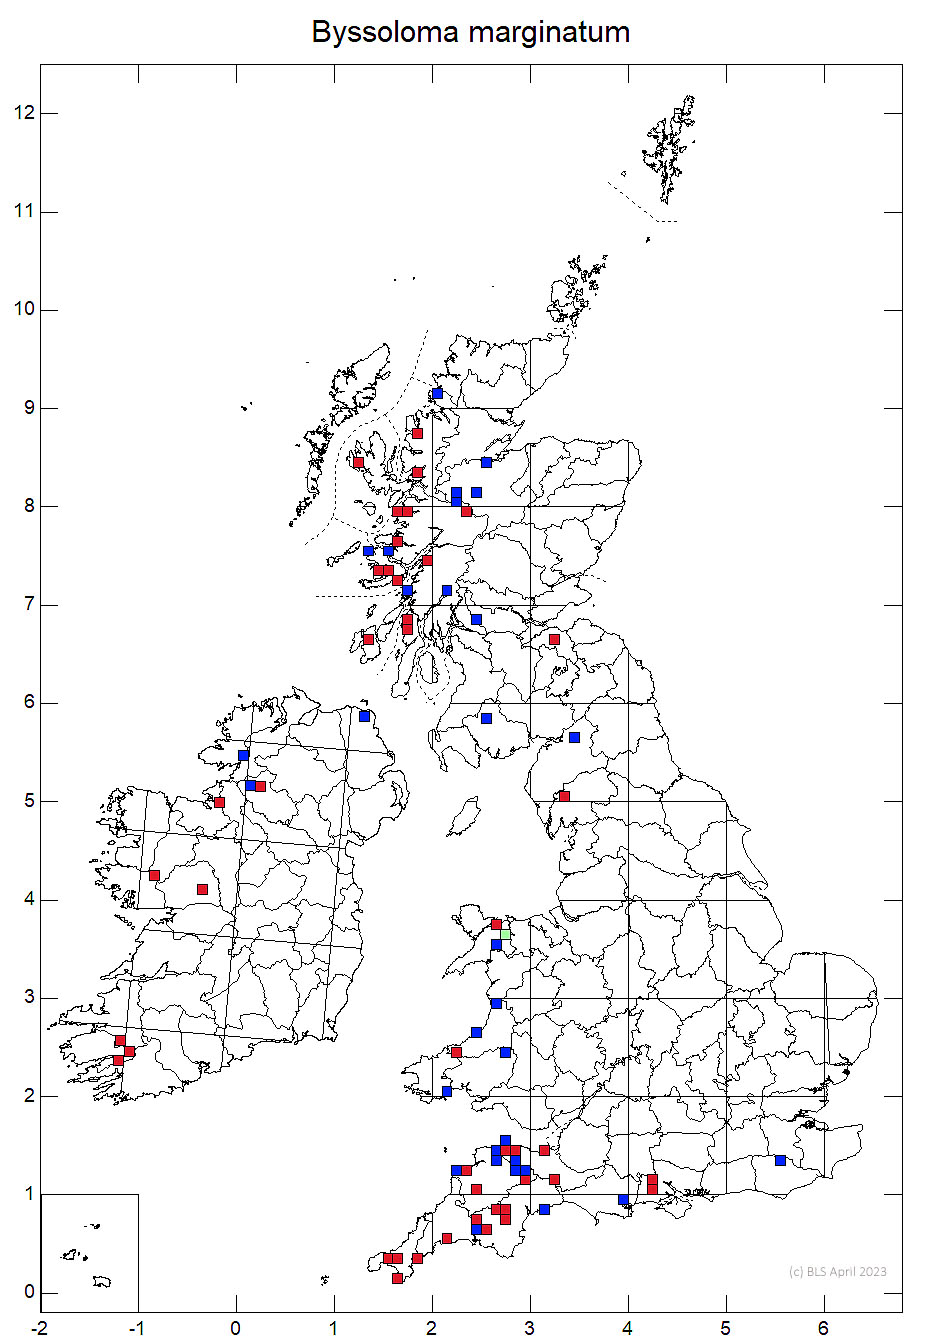 Byssoloma marginatum 10km sq distribution map